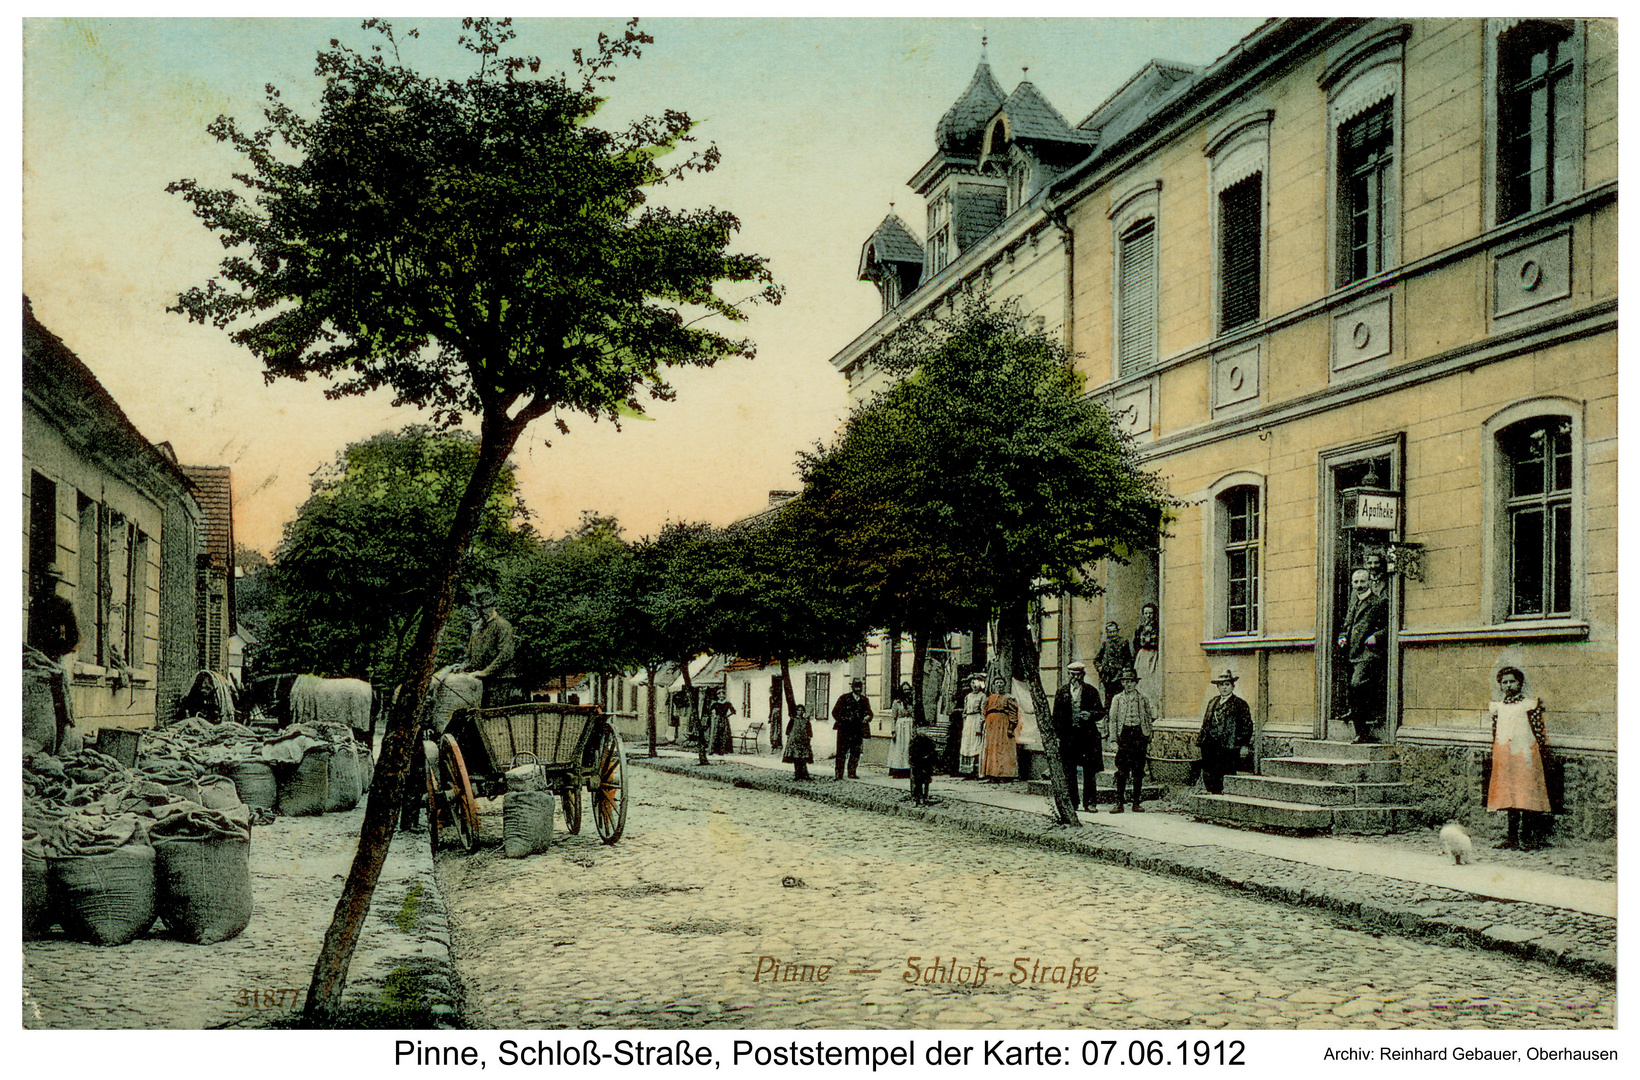 Pinne, Provinz Posen, Westpreußen, Schloßstraße, um 1911 (heute - Pniewy, Polen)